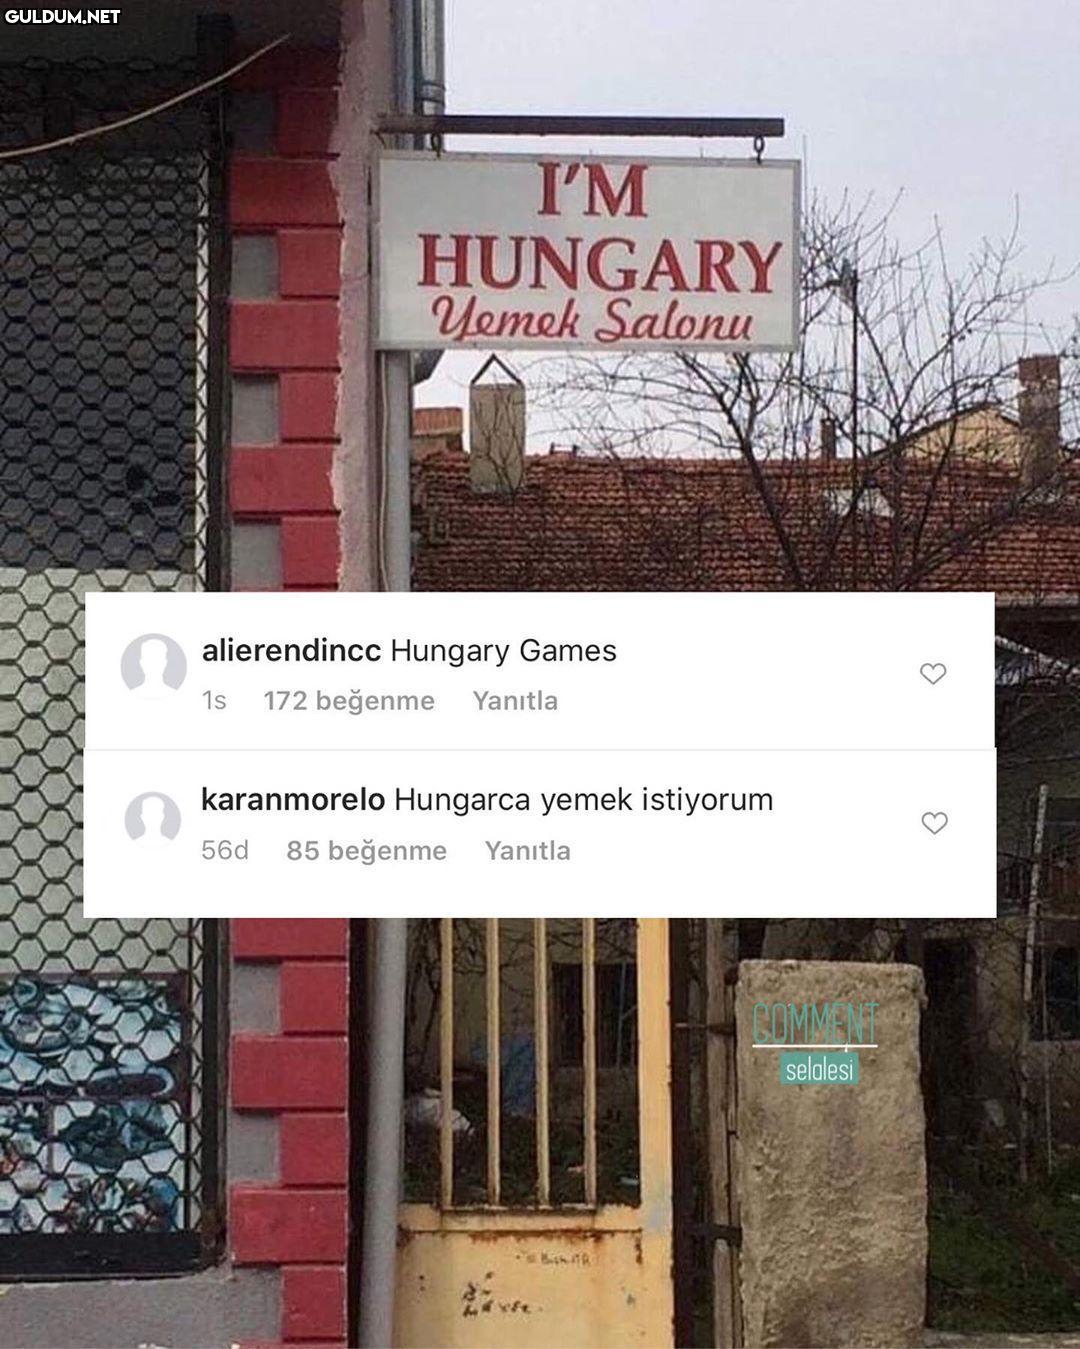 I'M HUNGARY 
yemek Salonu...